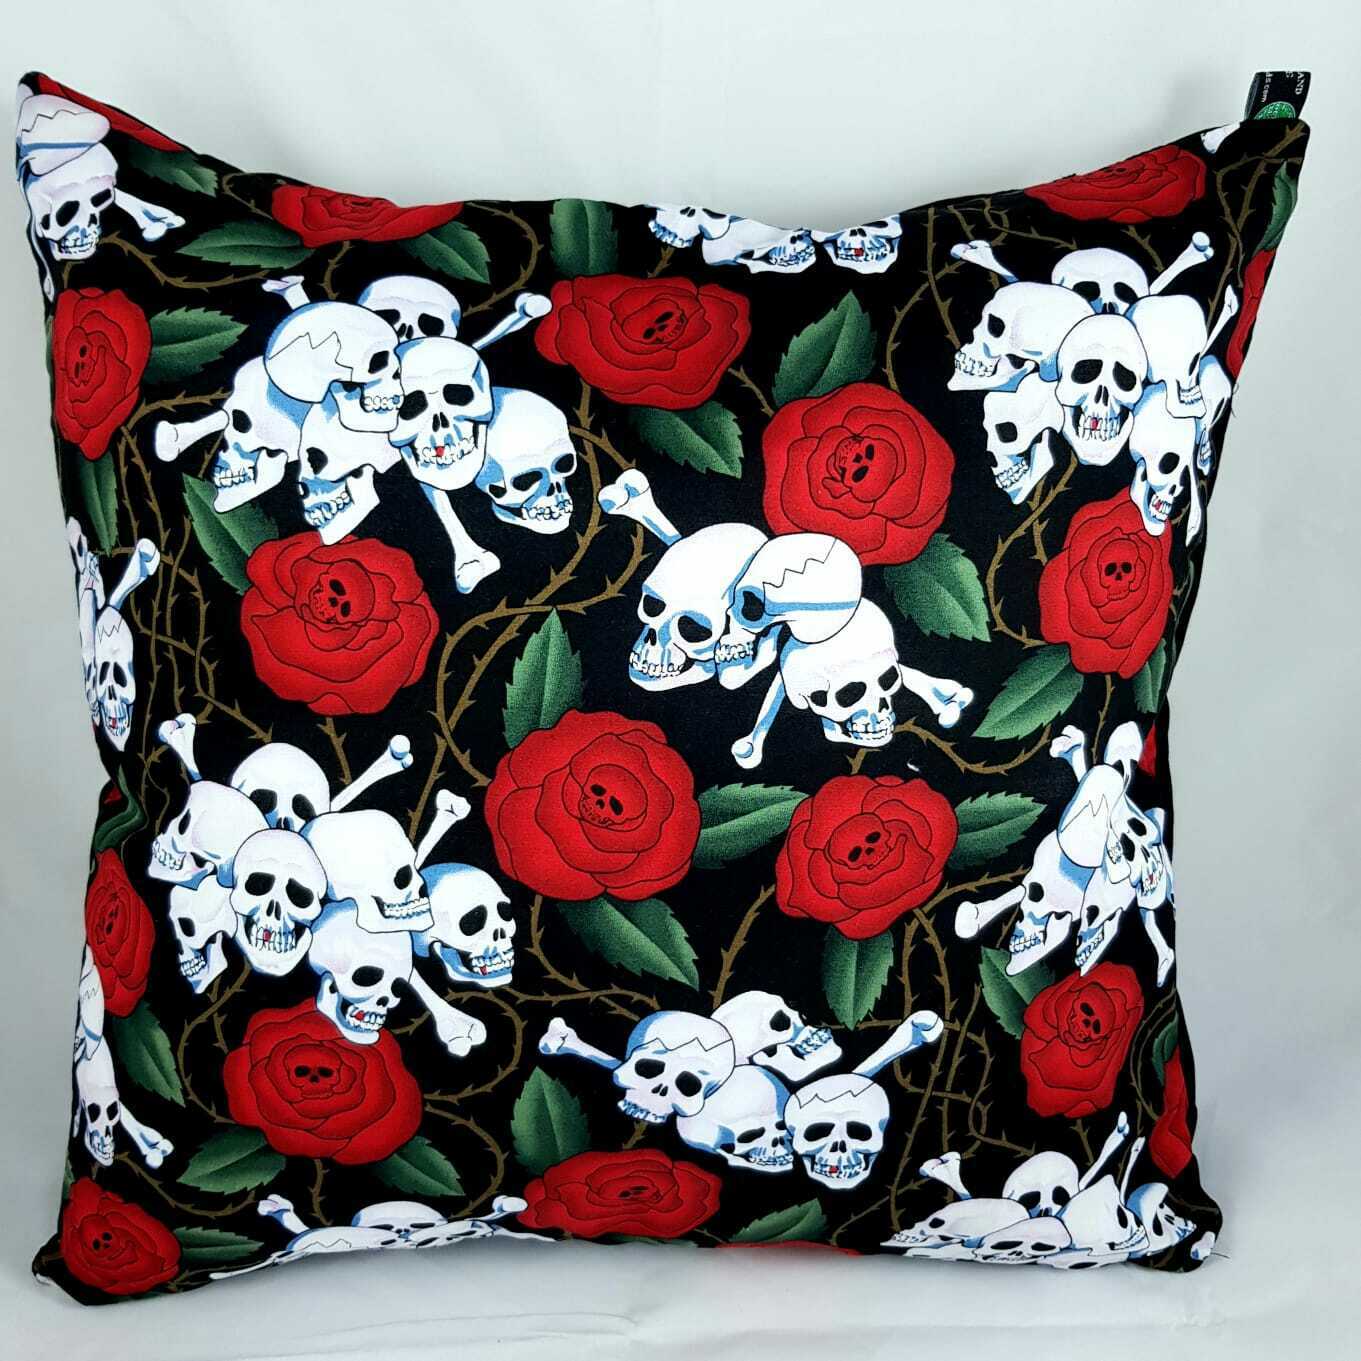 Skull & Cross bones Roses Pirate Cushion Cover Decorative Case fits 18" x 18"